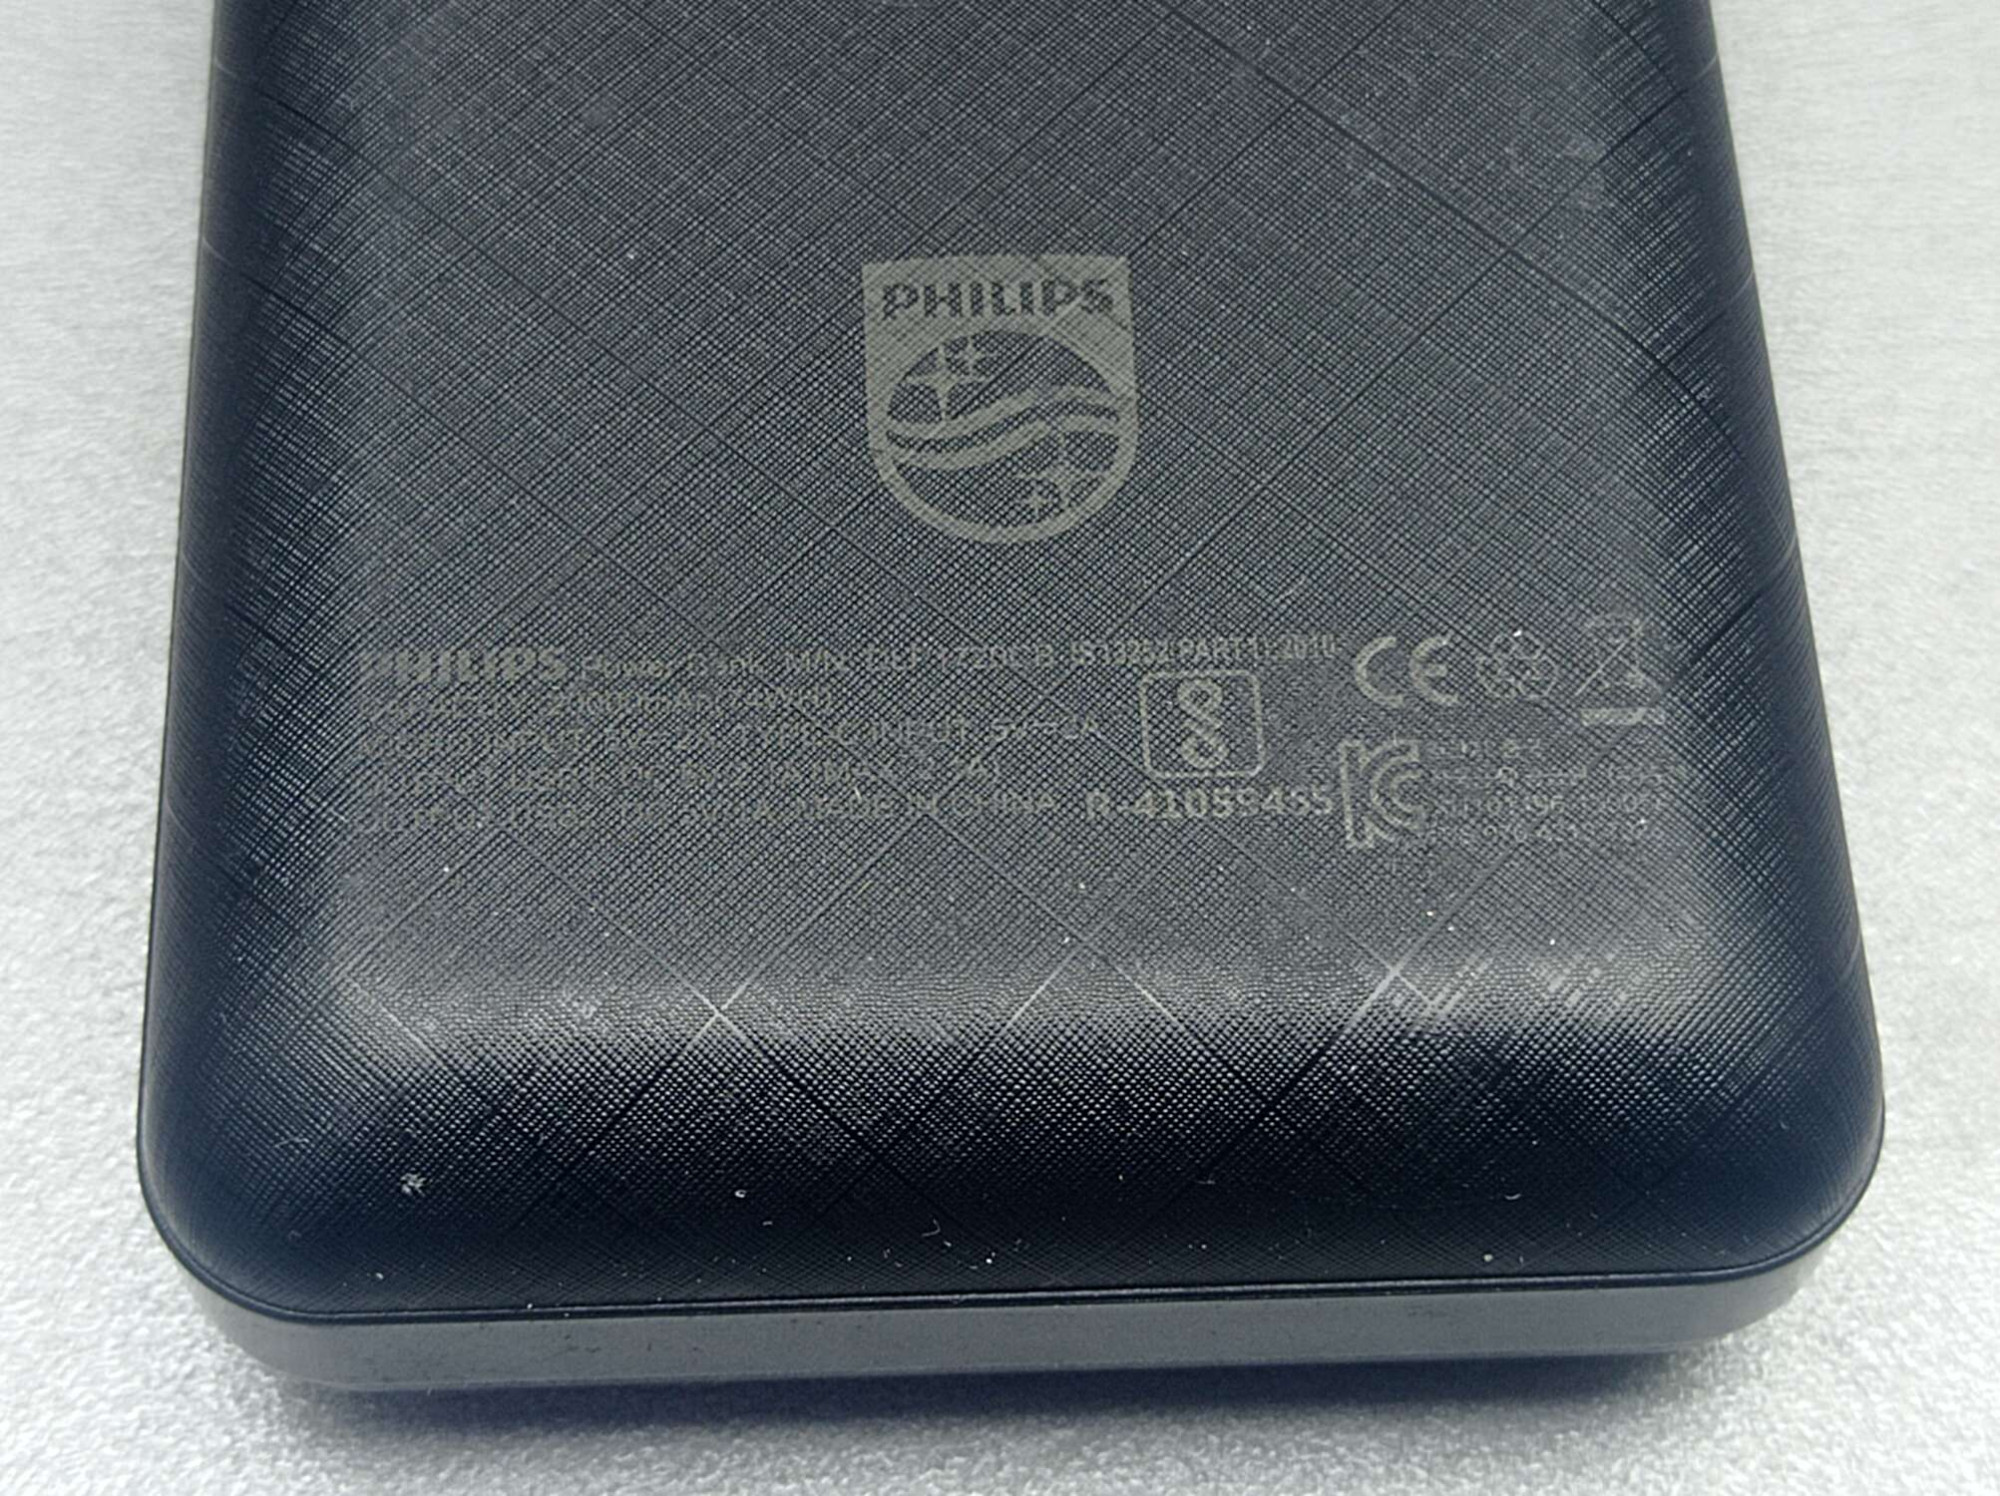 Power Bank Philips 20000 mAh DLP1720CB 7